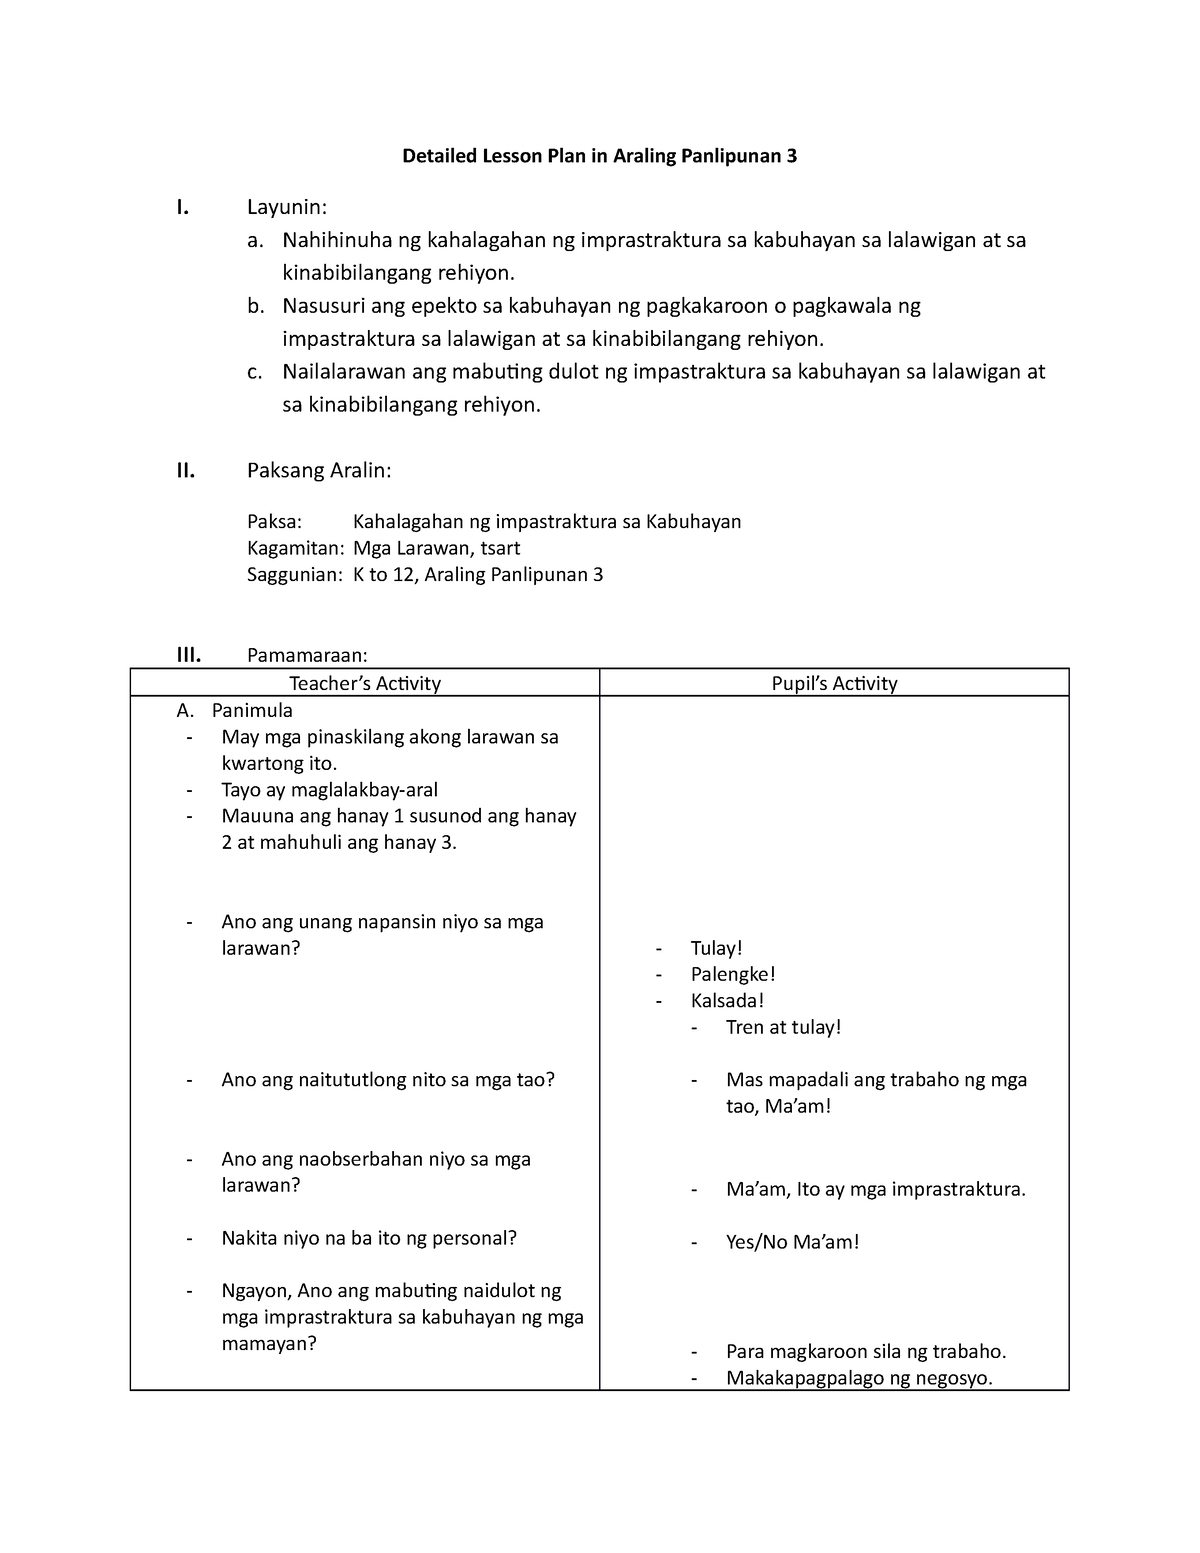 example of detailed lesson plan in araling panlipunan